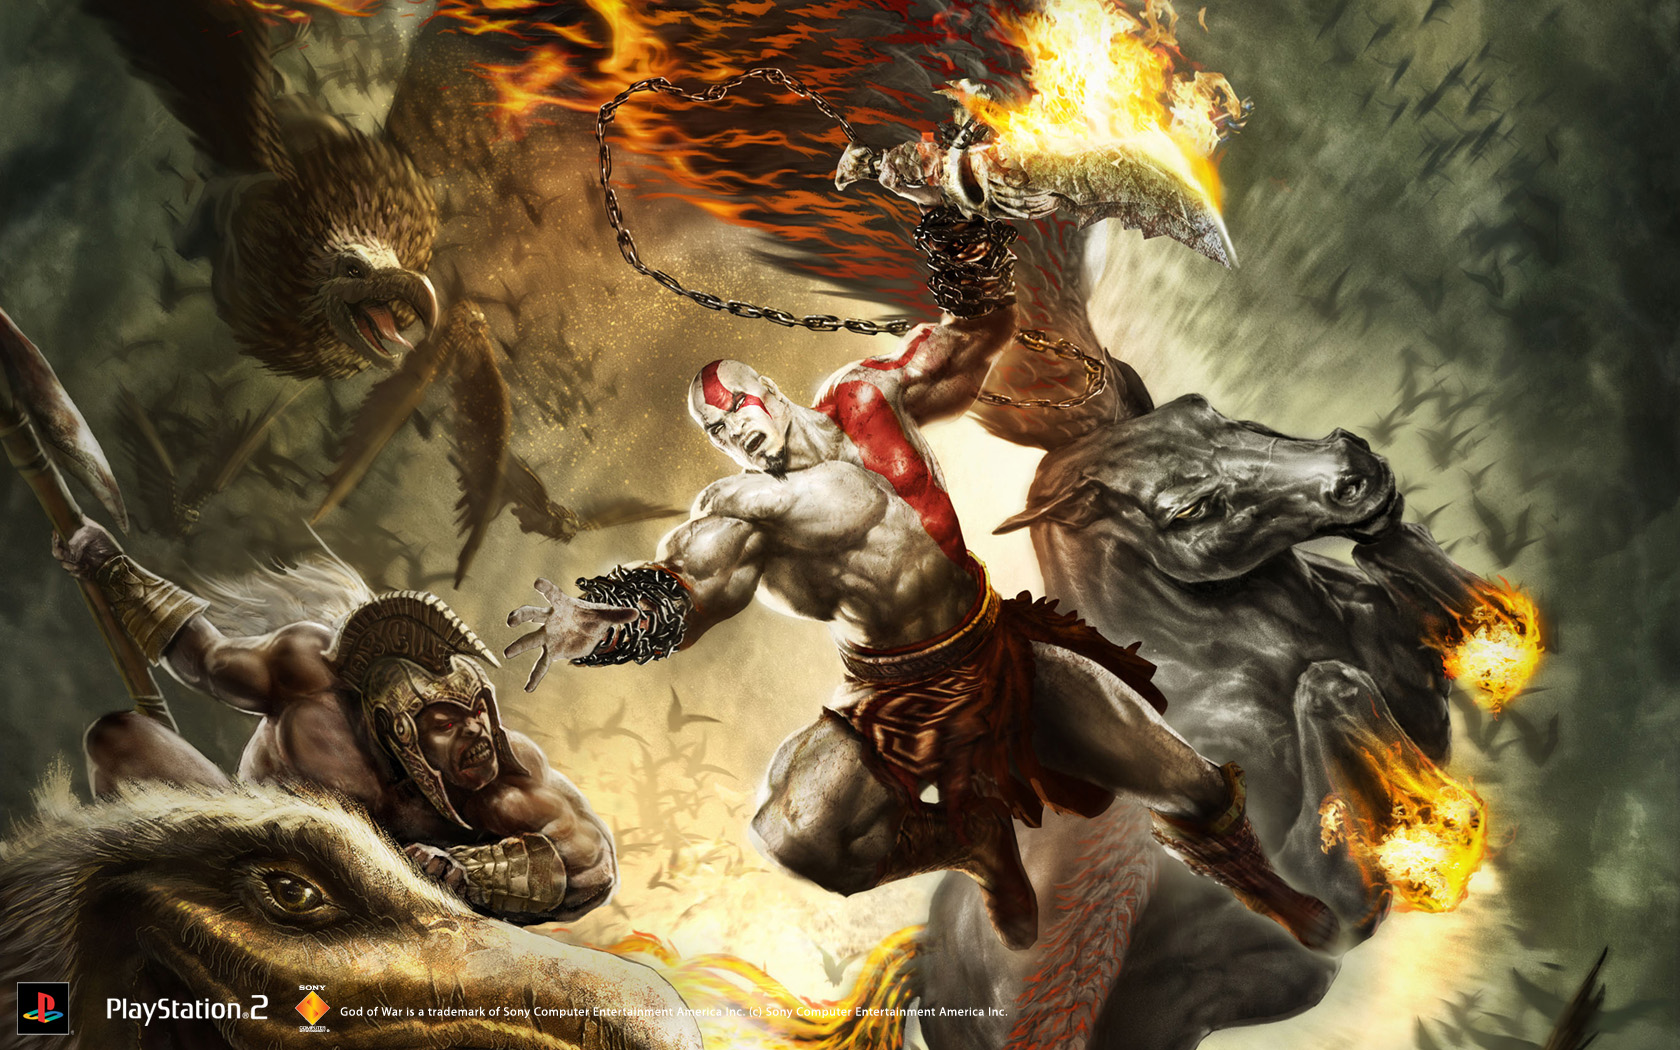 Cover of PlayStation 2 era of Kratos in Greek Mythology